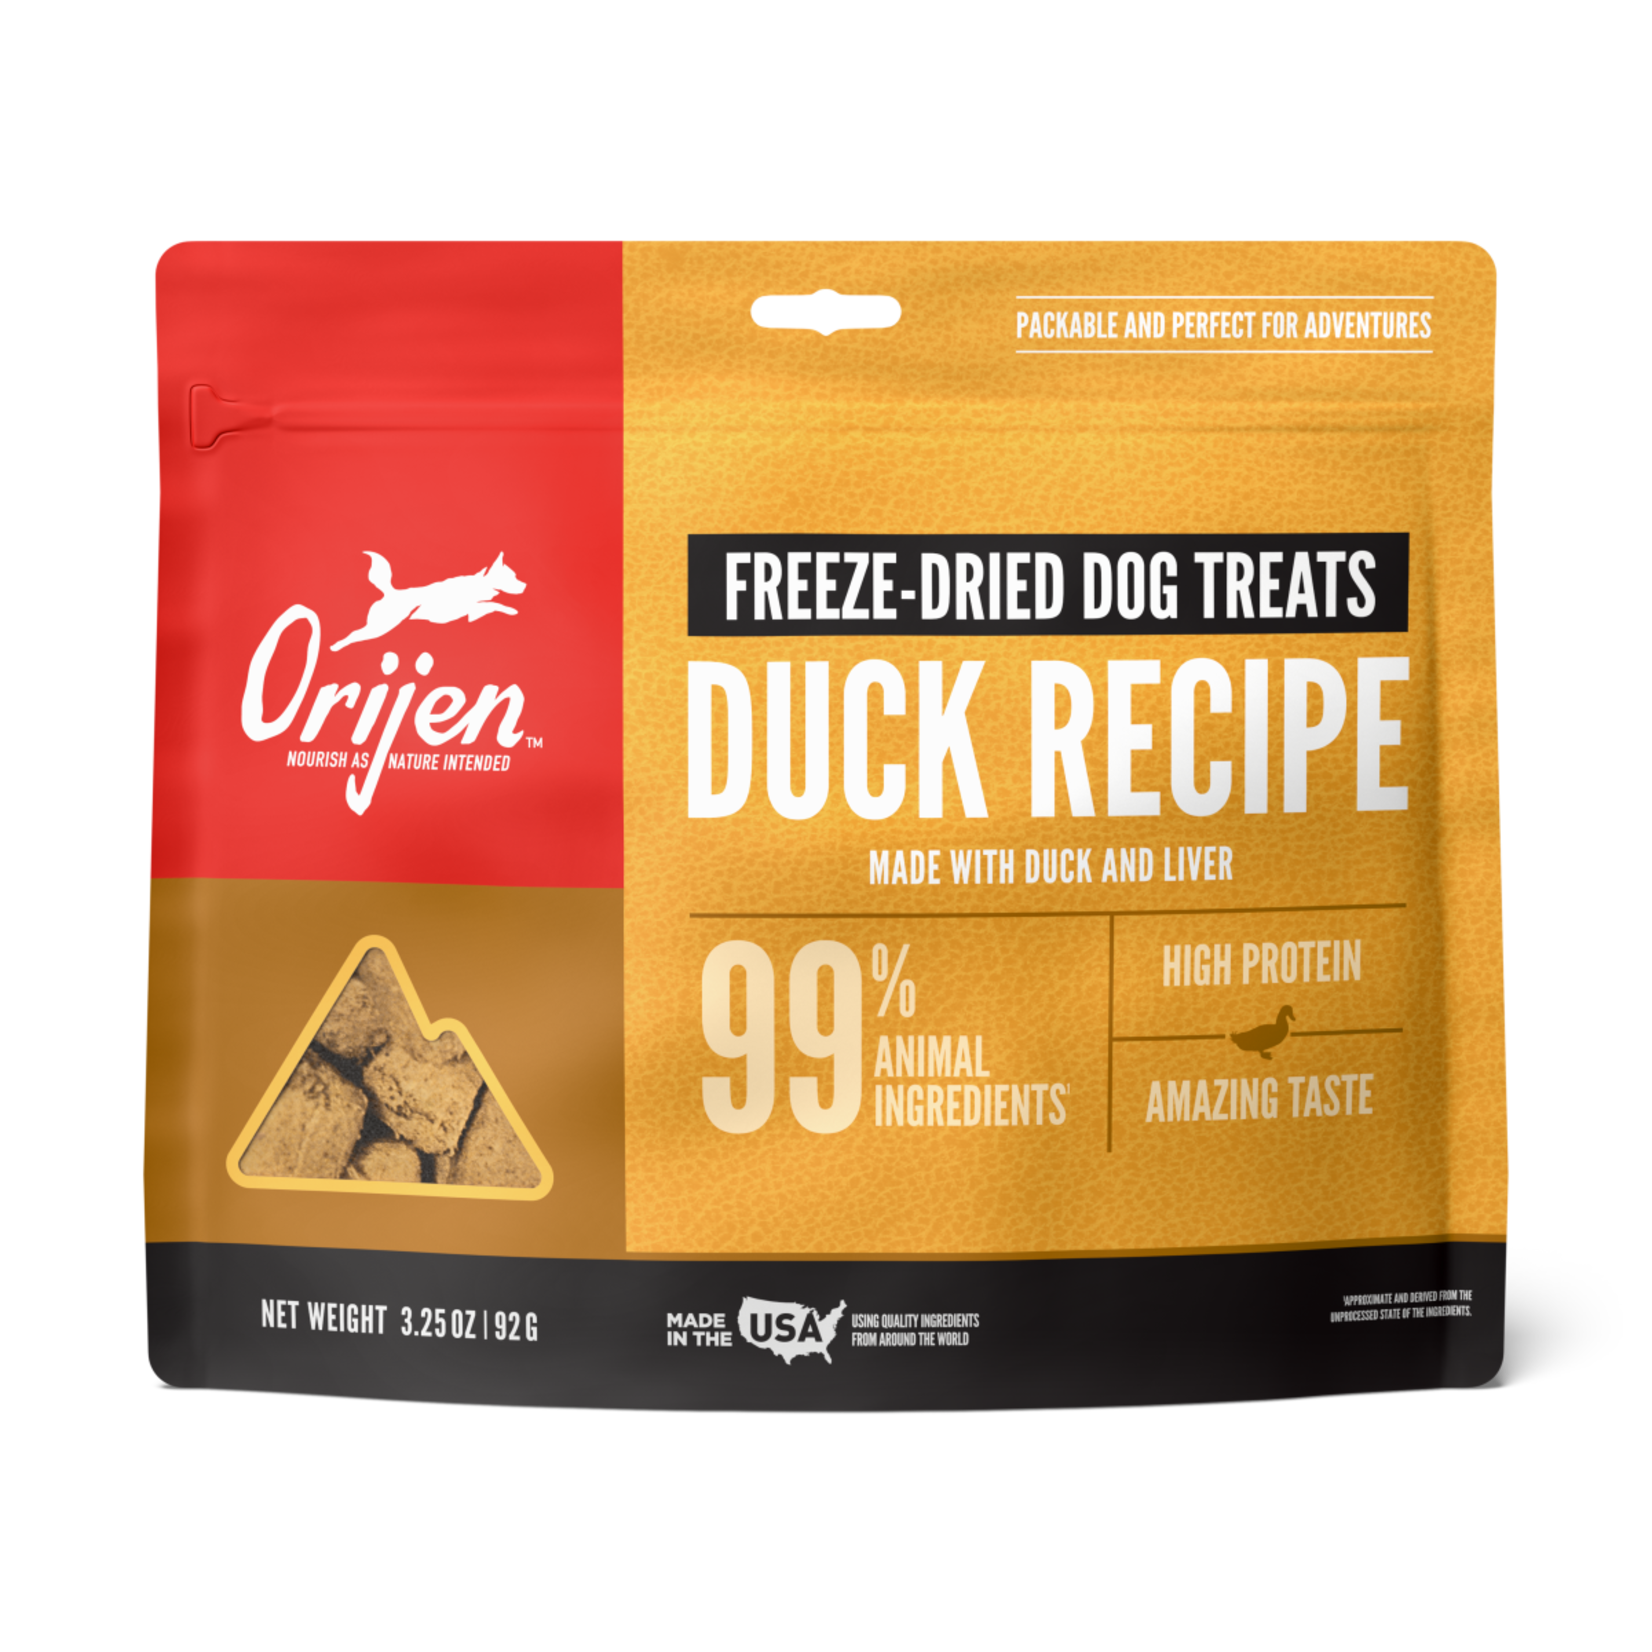 Champion Pet Foods Orijen FD Dog Treats Duck Recipe 3.25 OZ